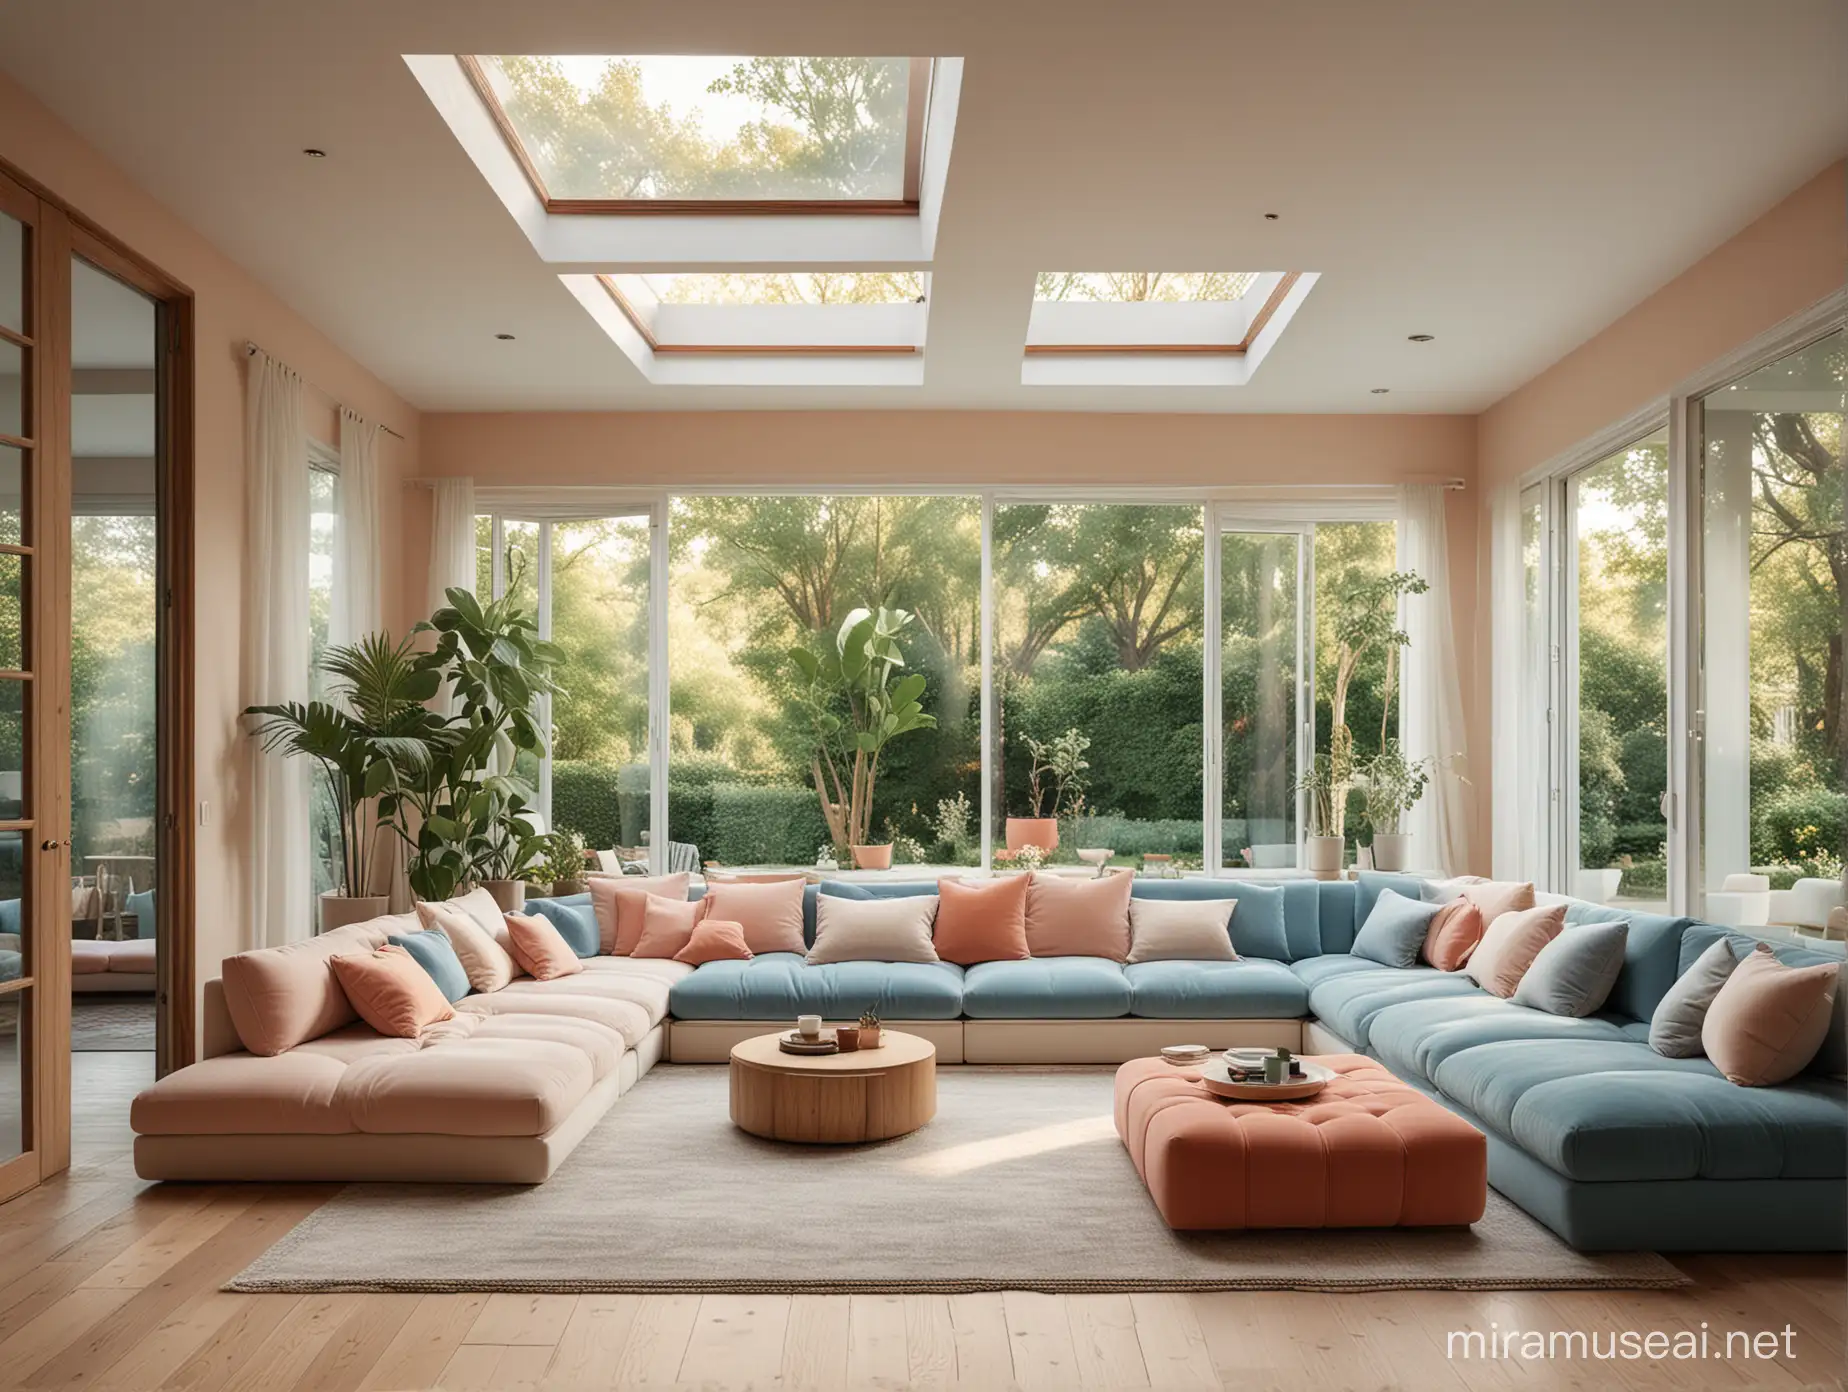 Dreamy Sunken Living Room Conversation Pit with Bauhaus Furniture